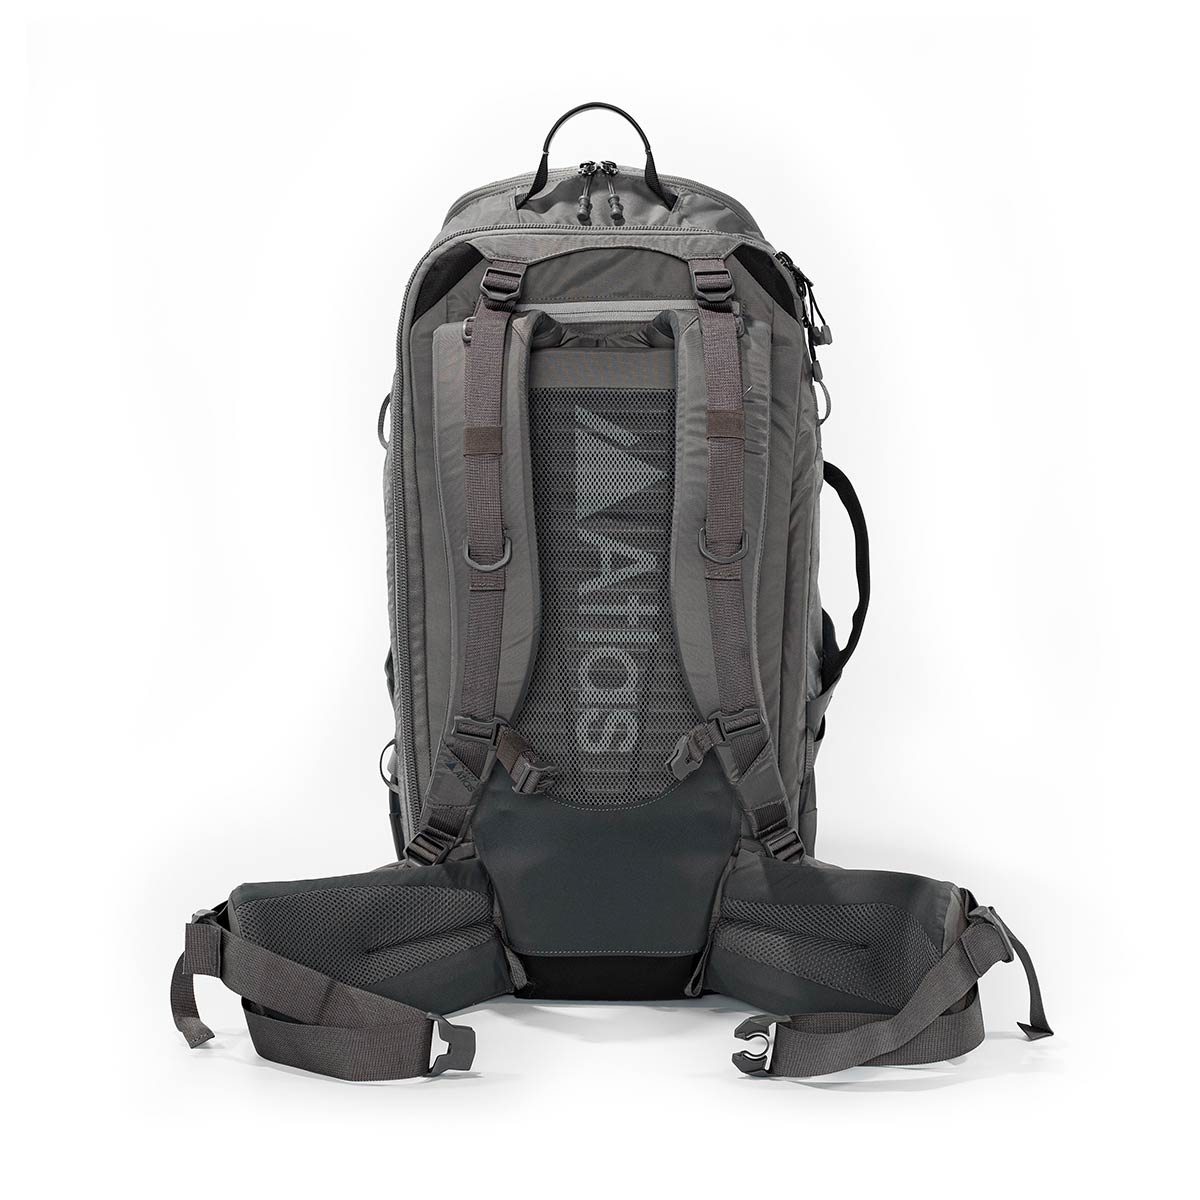 Atlas Adventure Large Backpack (Gray)